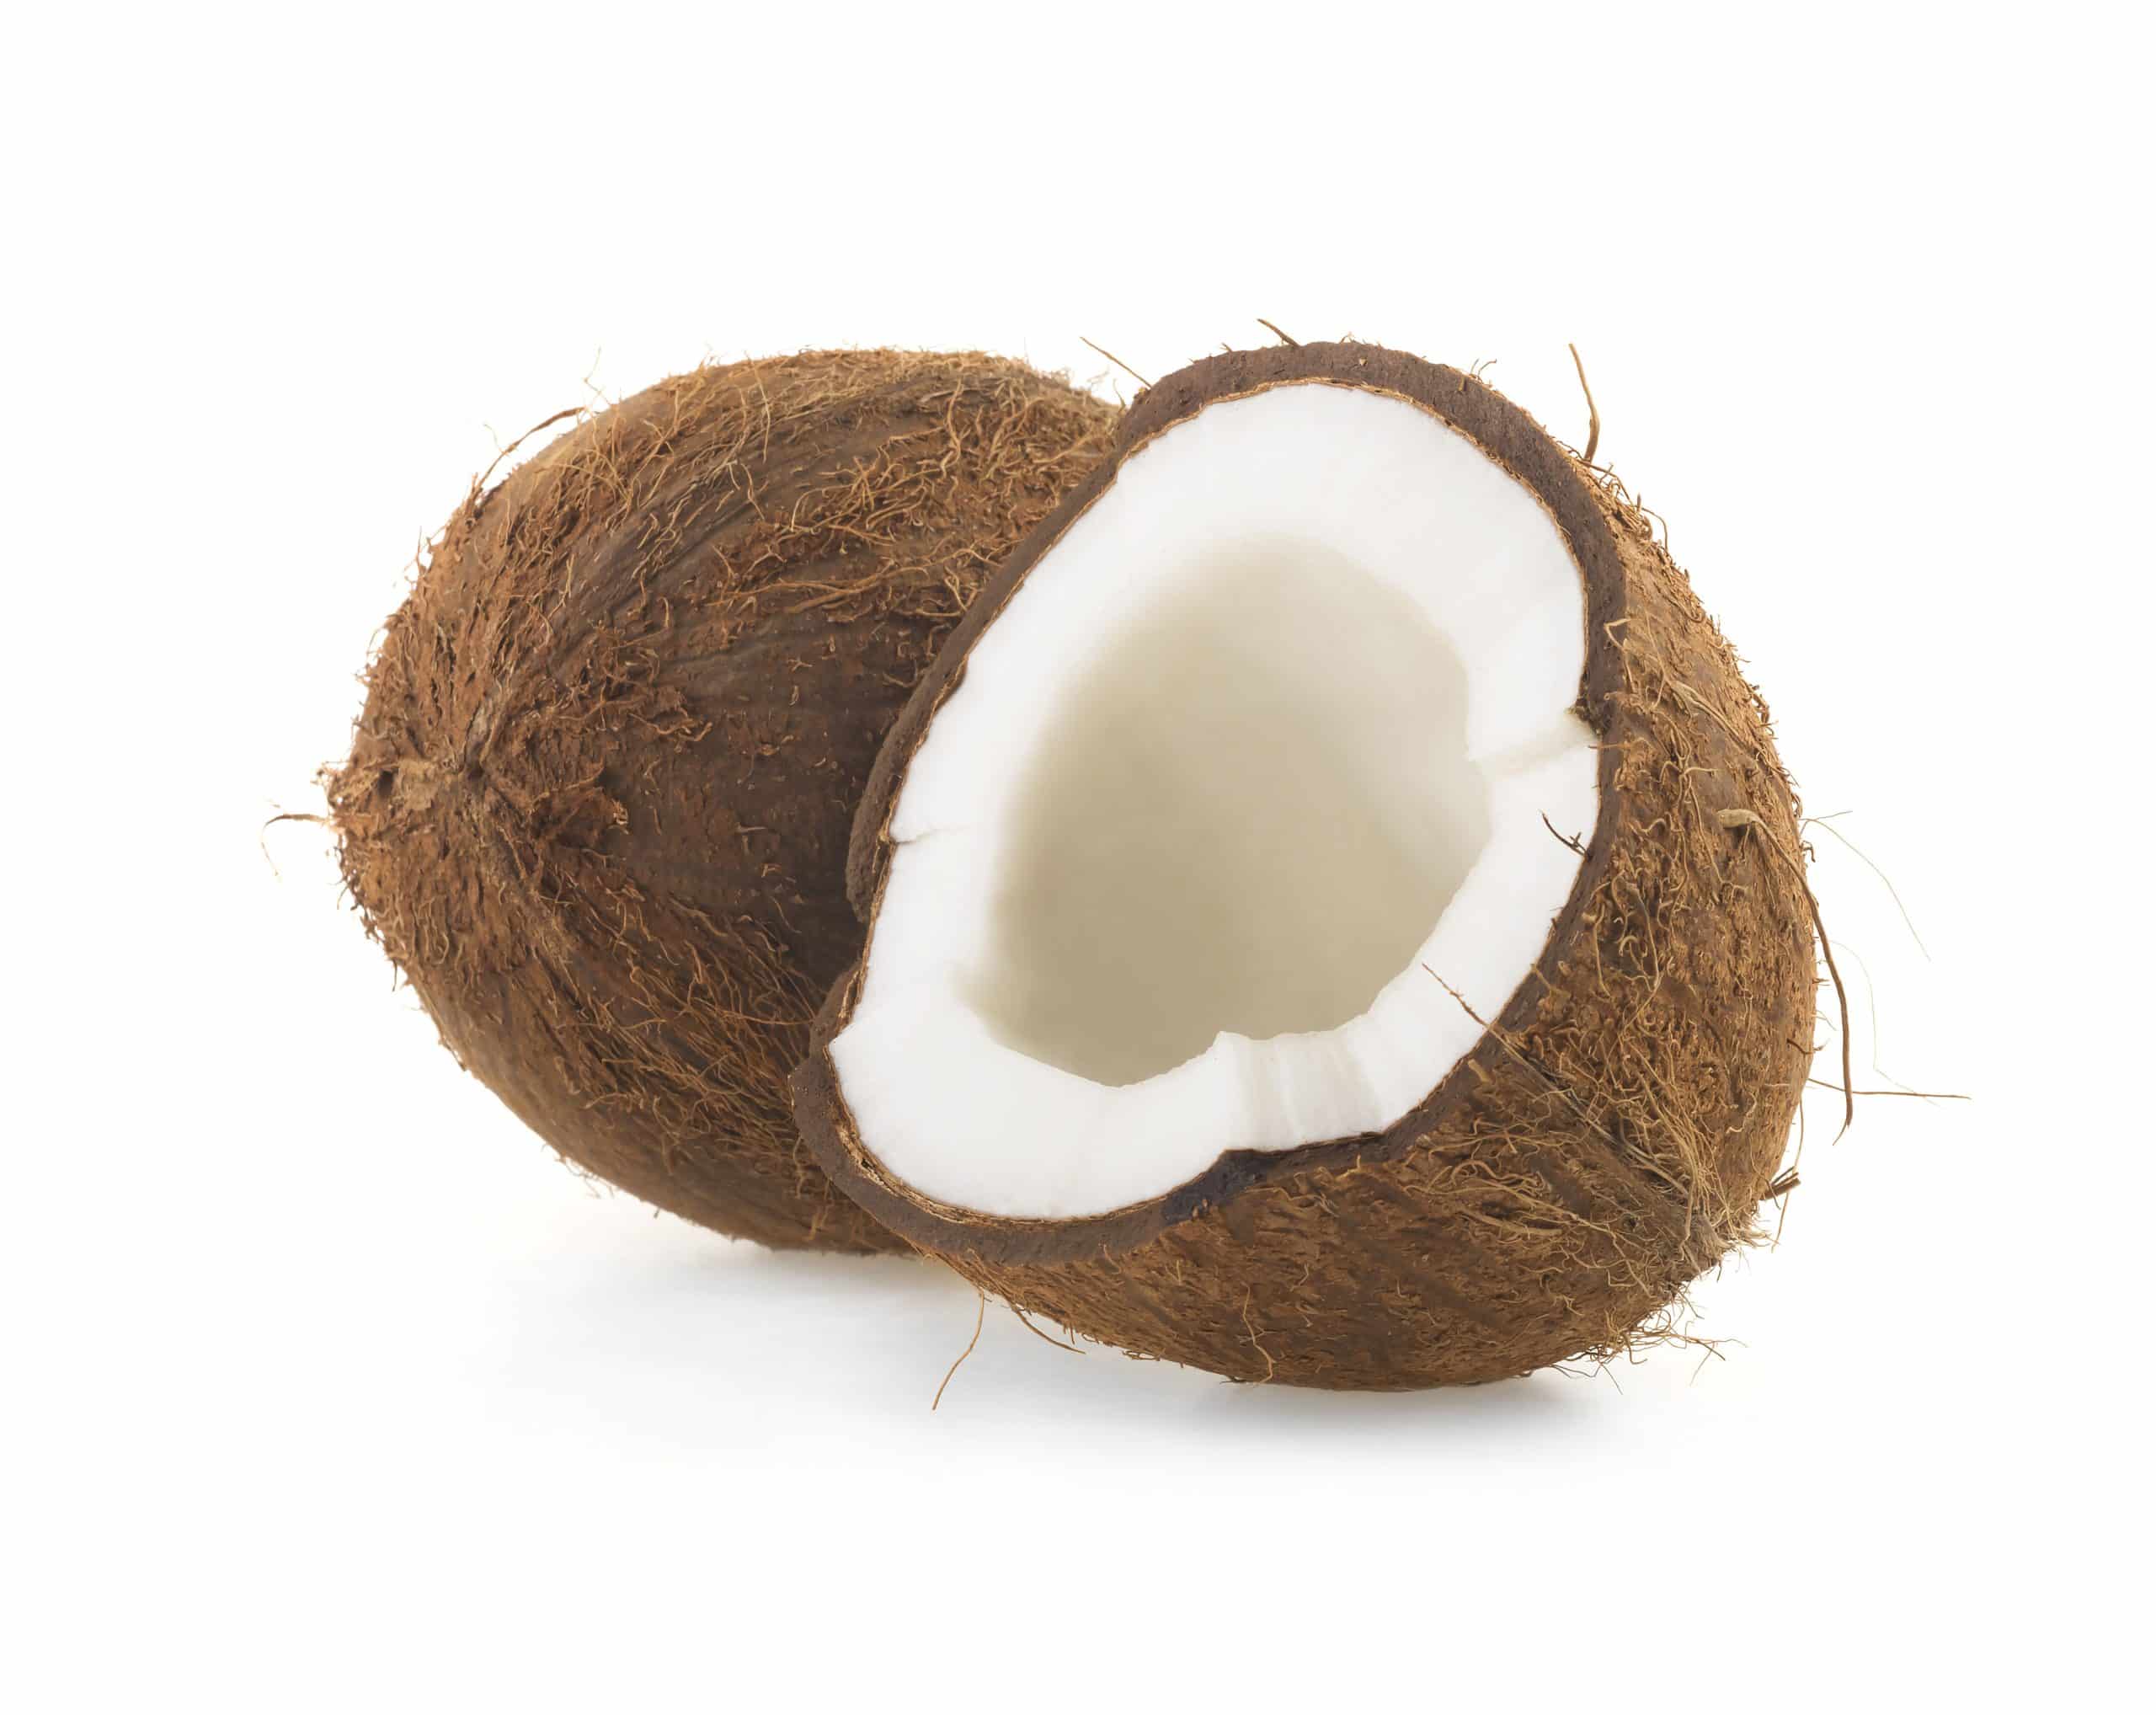 coco coir from a coconut husk